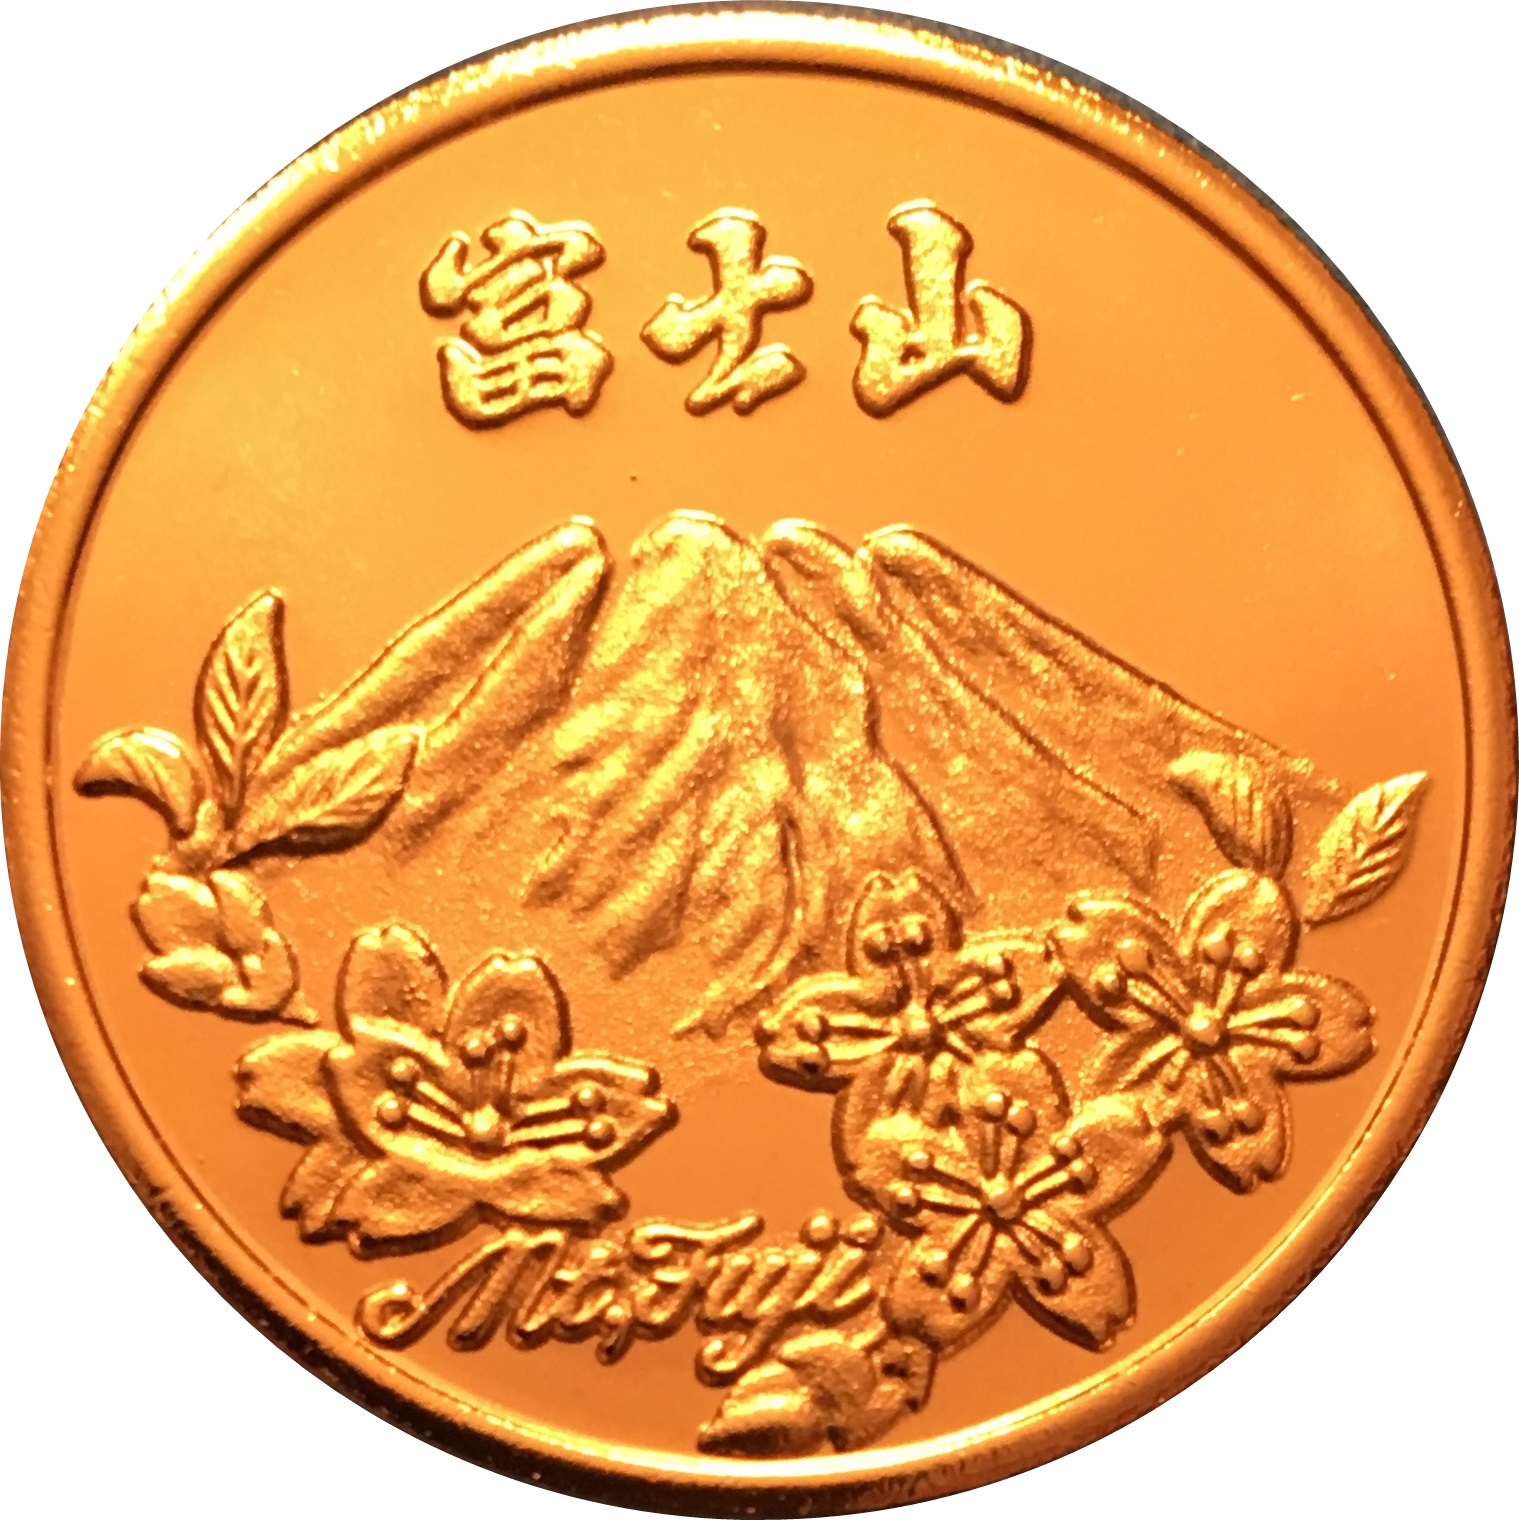 JAPAN ONE Sen Coin BONUS OFFERS Japanese 1 Mount Fuji Showa Year 18 $ - PicClick AU